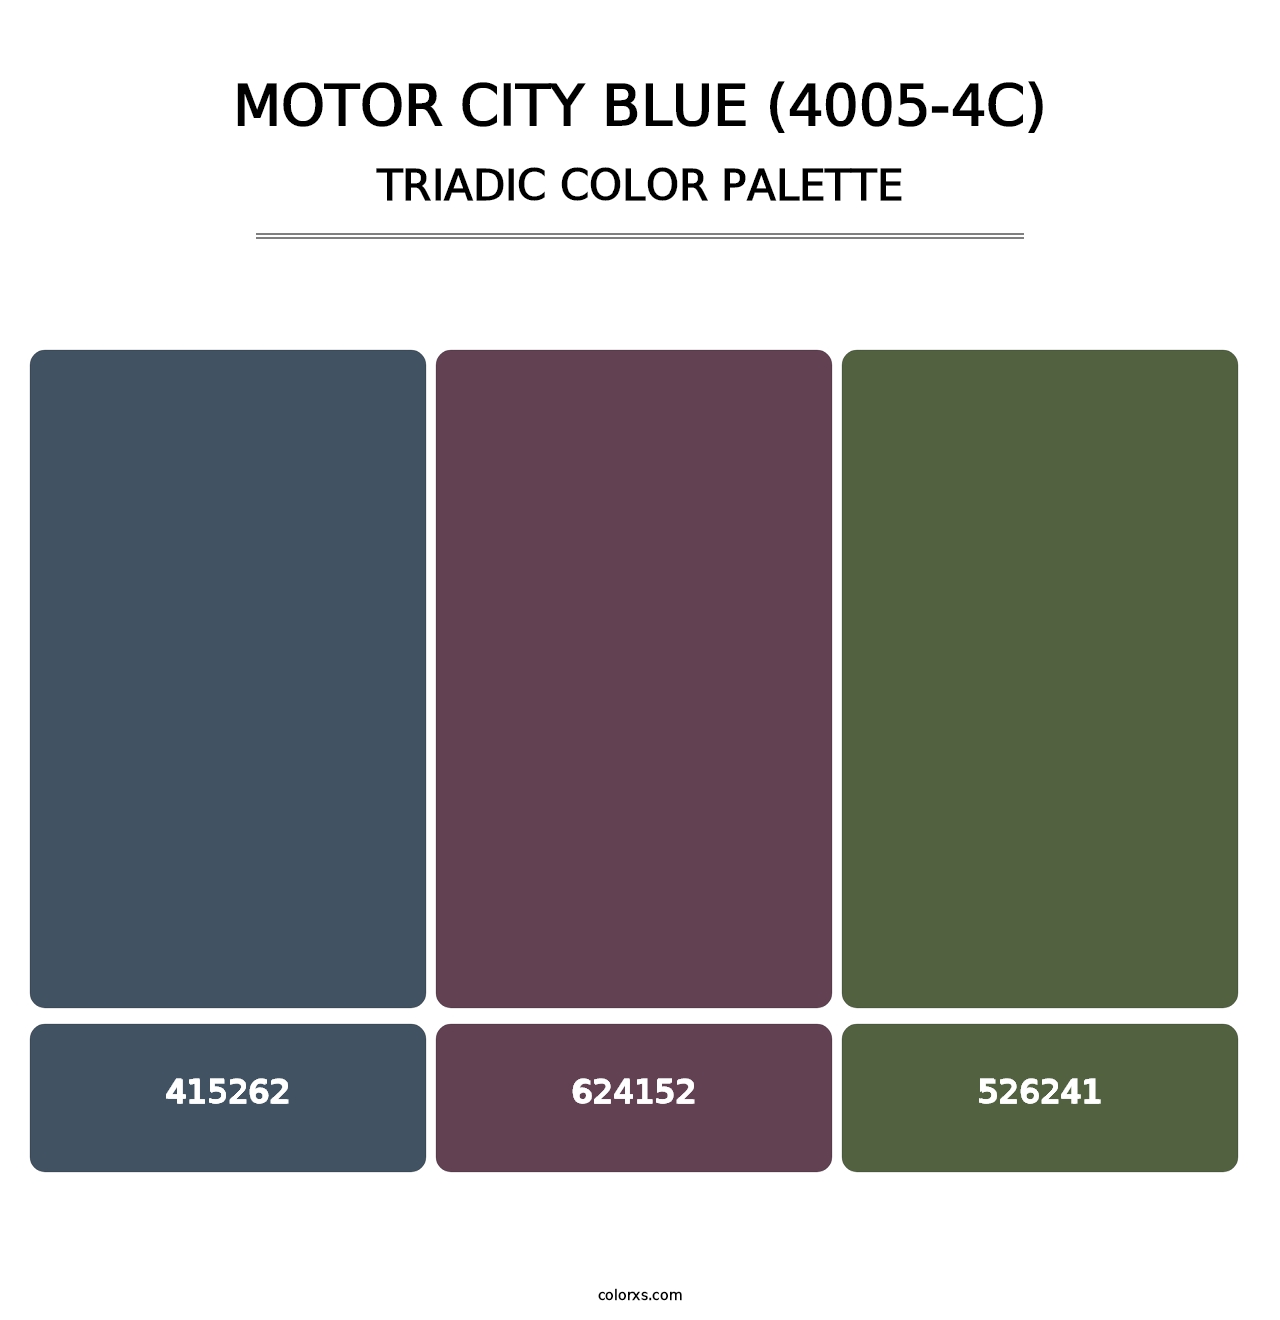 Motor City Blue (4005-4C) - Triadic Color Palette